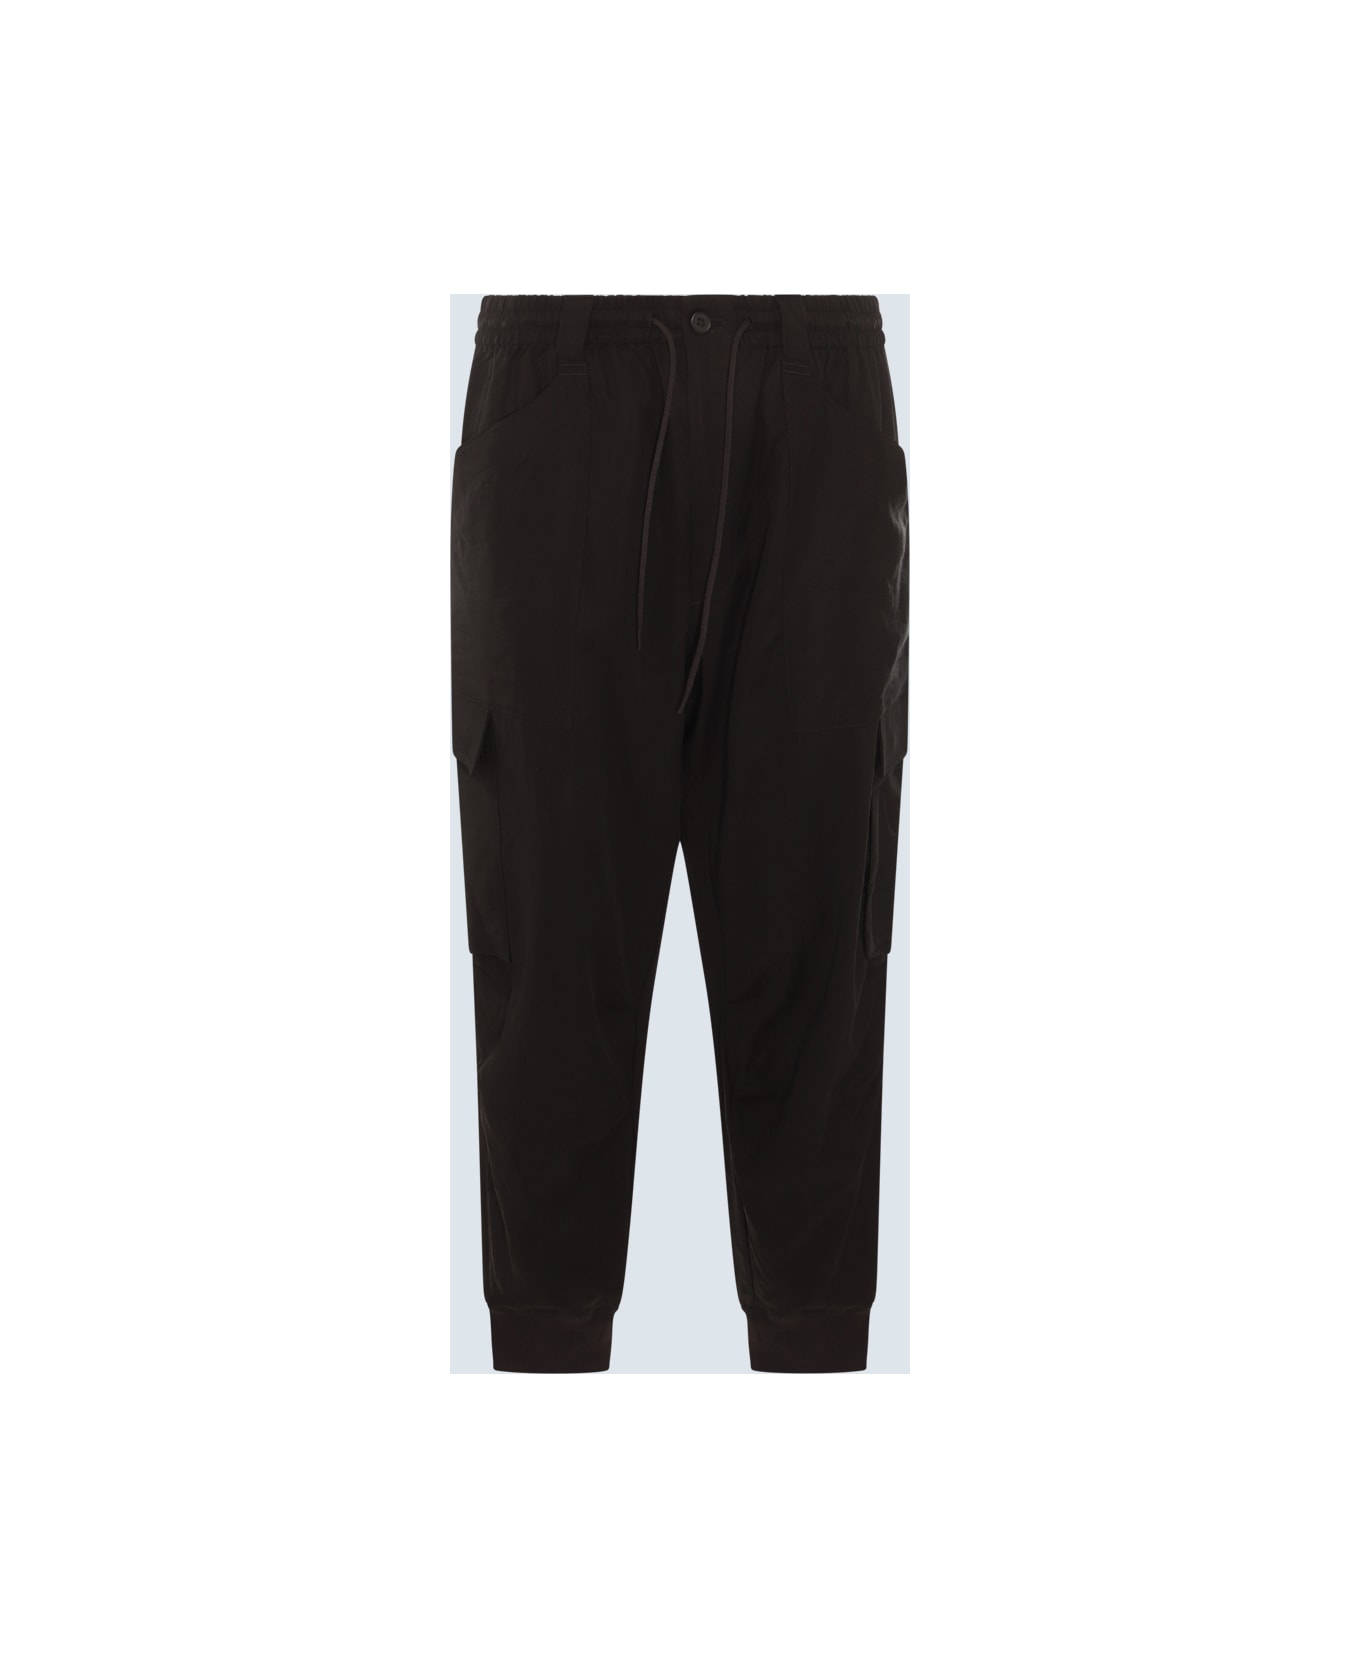 Y-3 Black Cotton Pants - Black スウェットパンツ